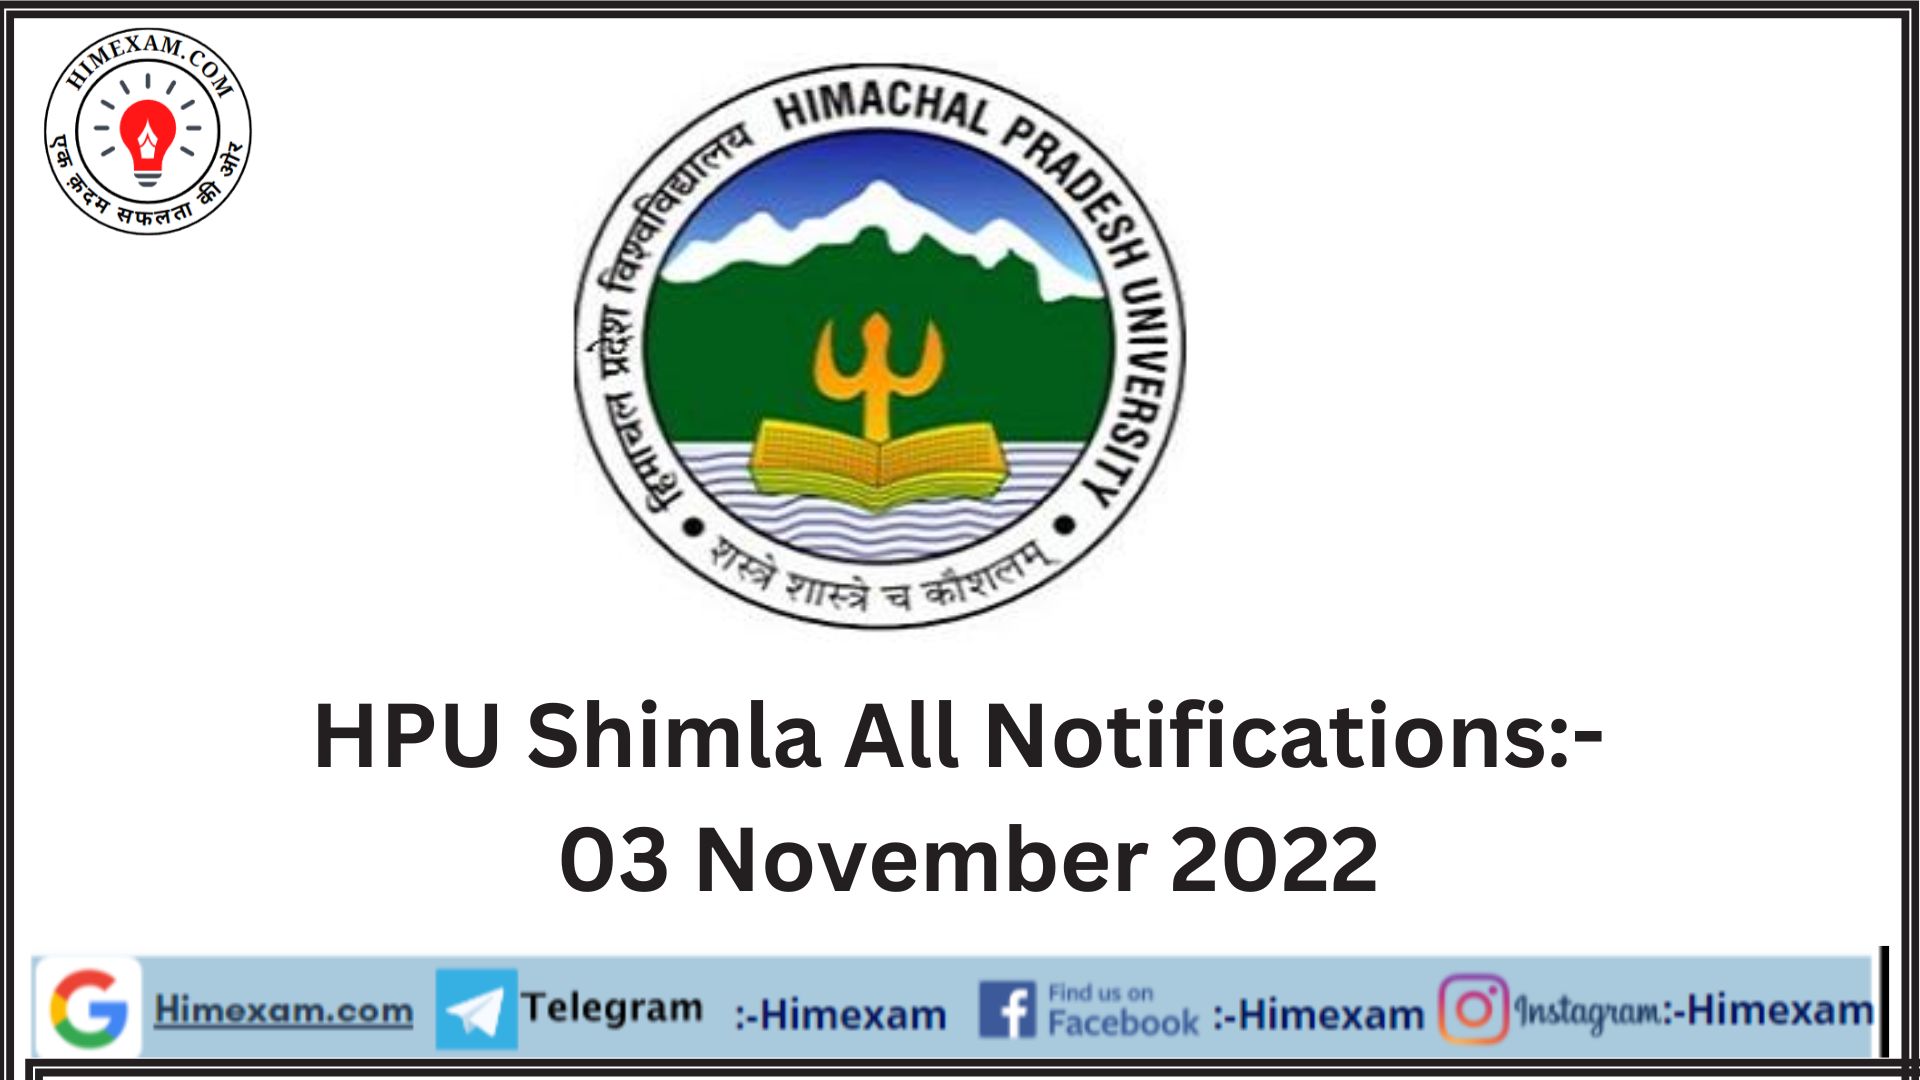 HPU Shimla All Notifications:- 03 November 2022